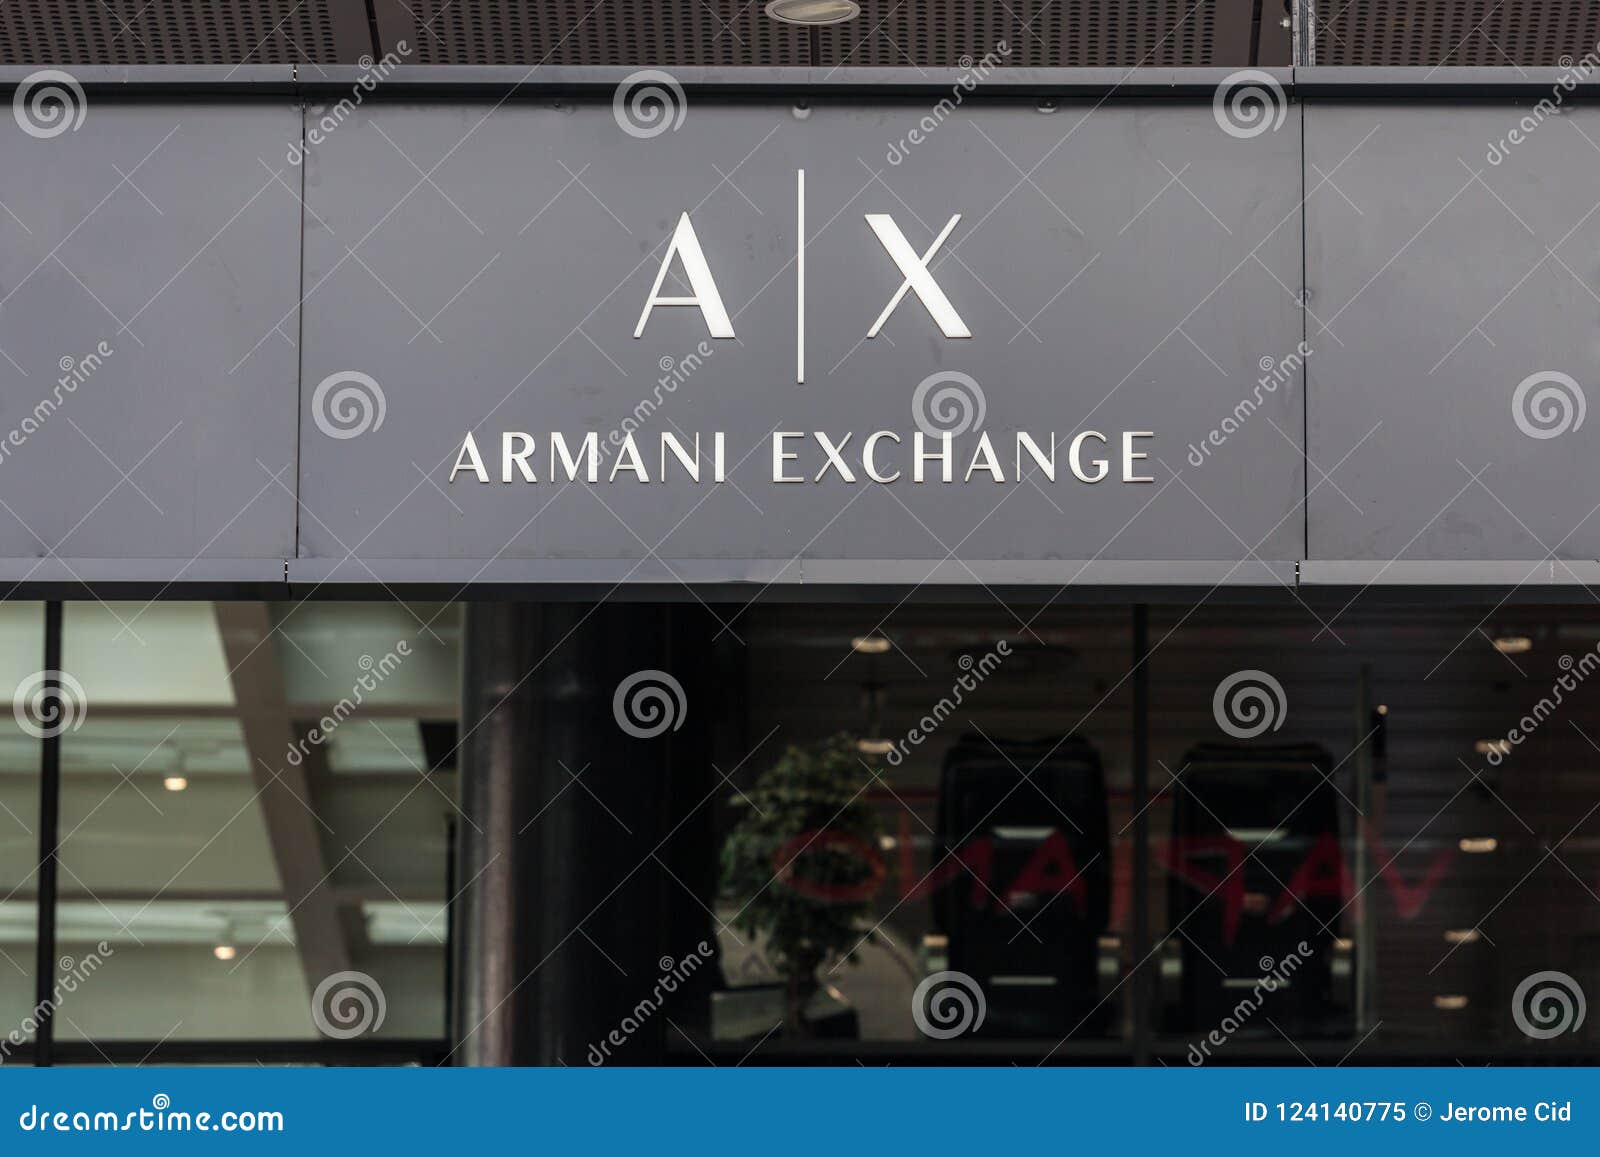 armani exchange symbol